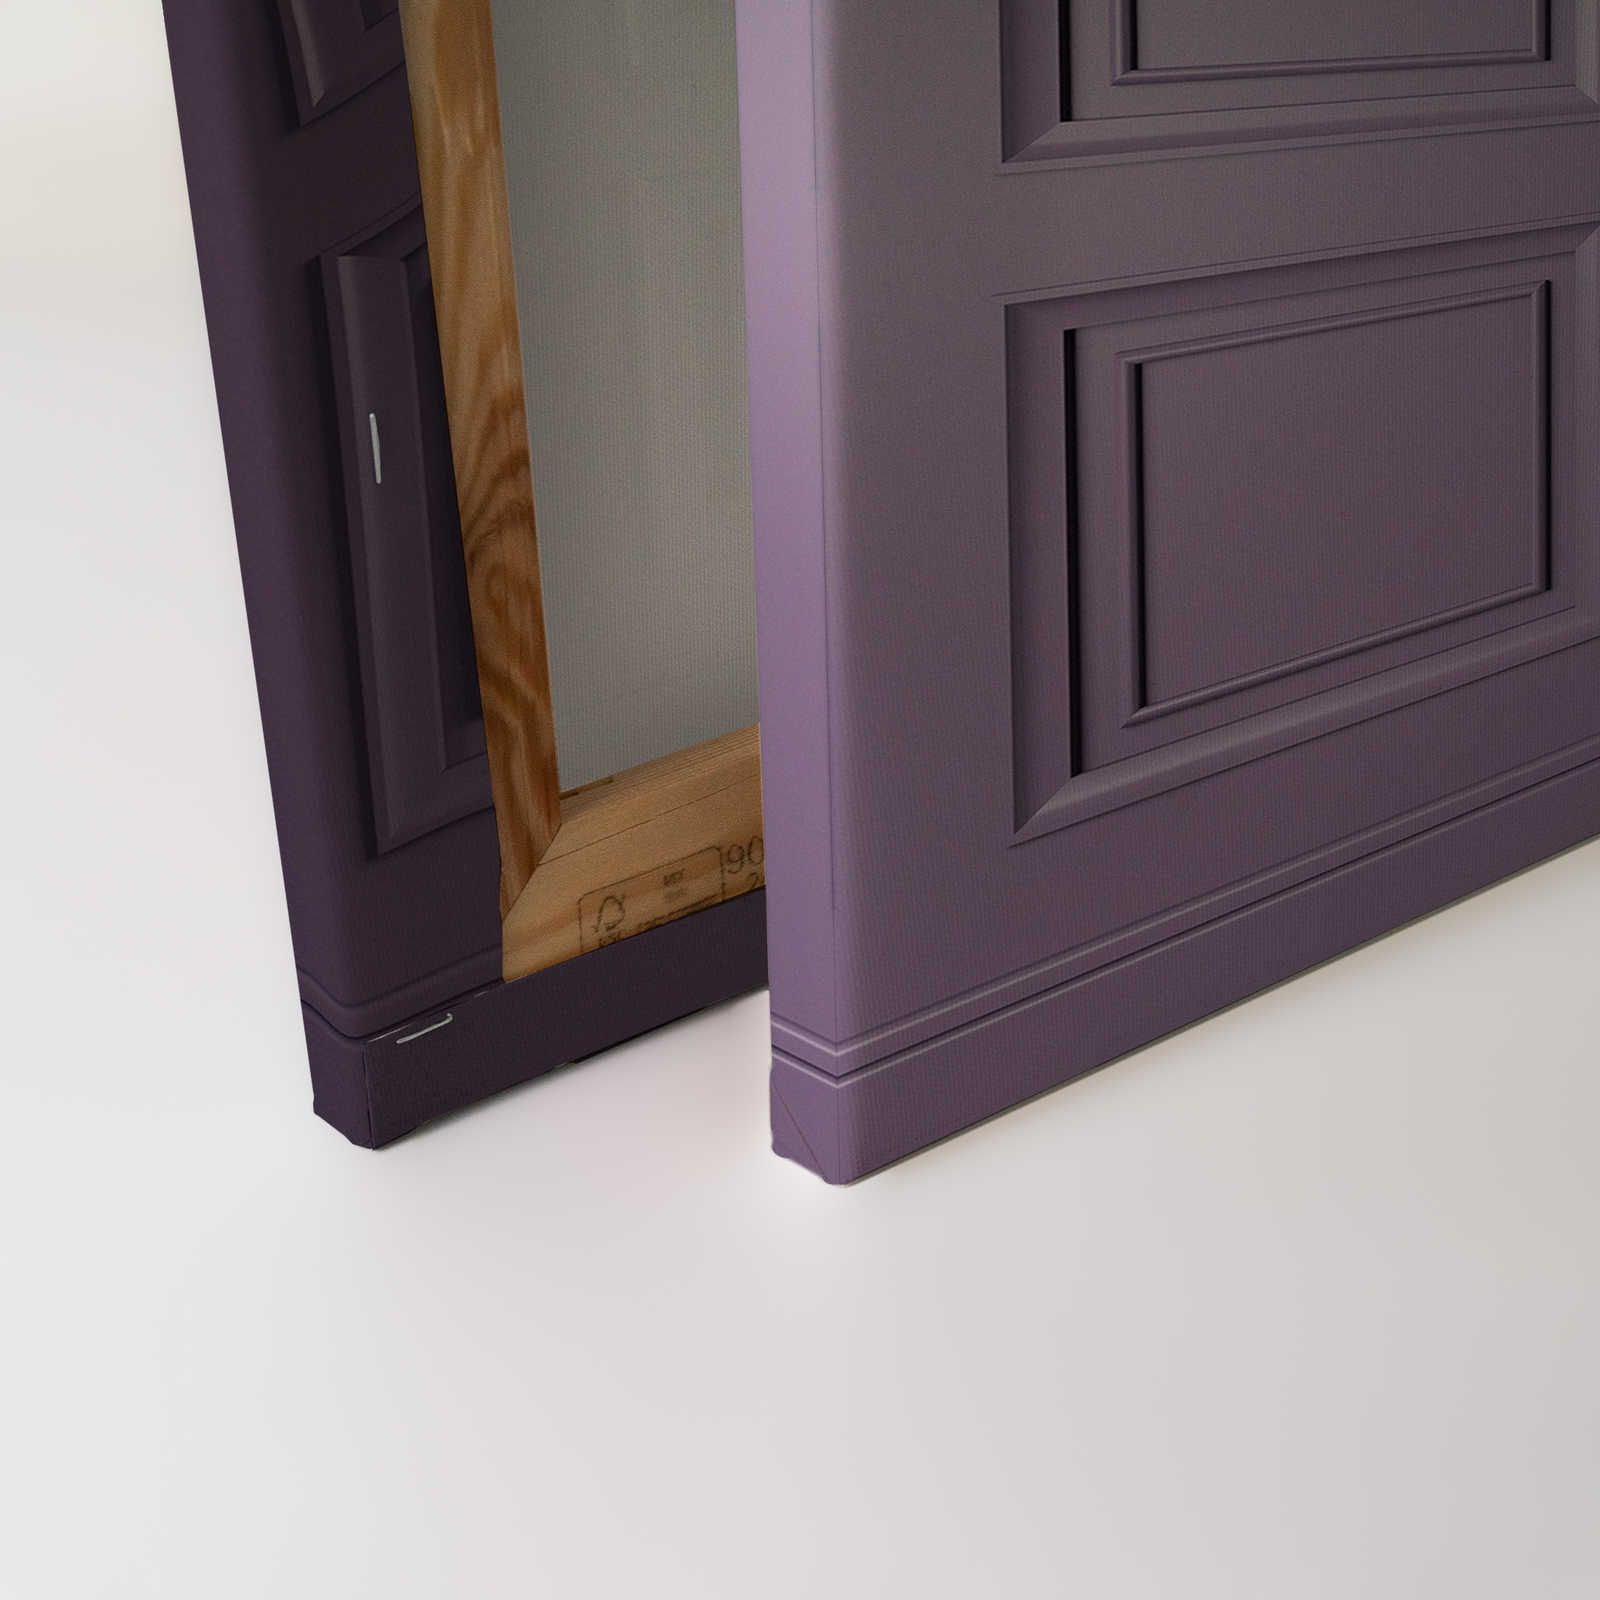             Kensington 3 - 3D Leinwandbild Holzvertäfelung dunkles Lila, Violett – 0,90 m x 0,60 m
        